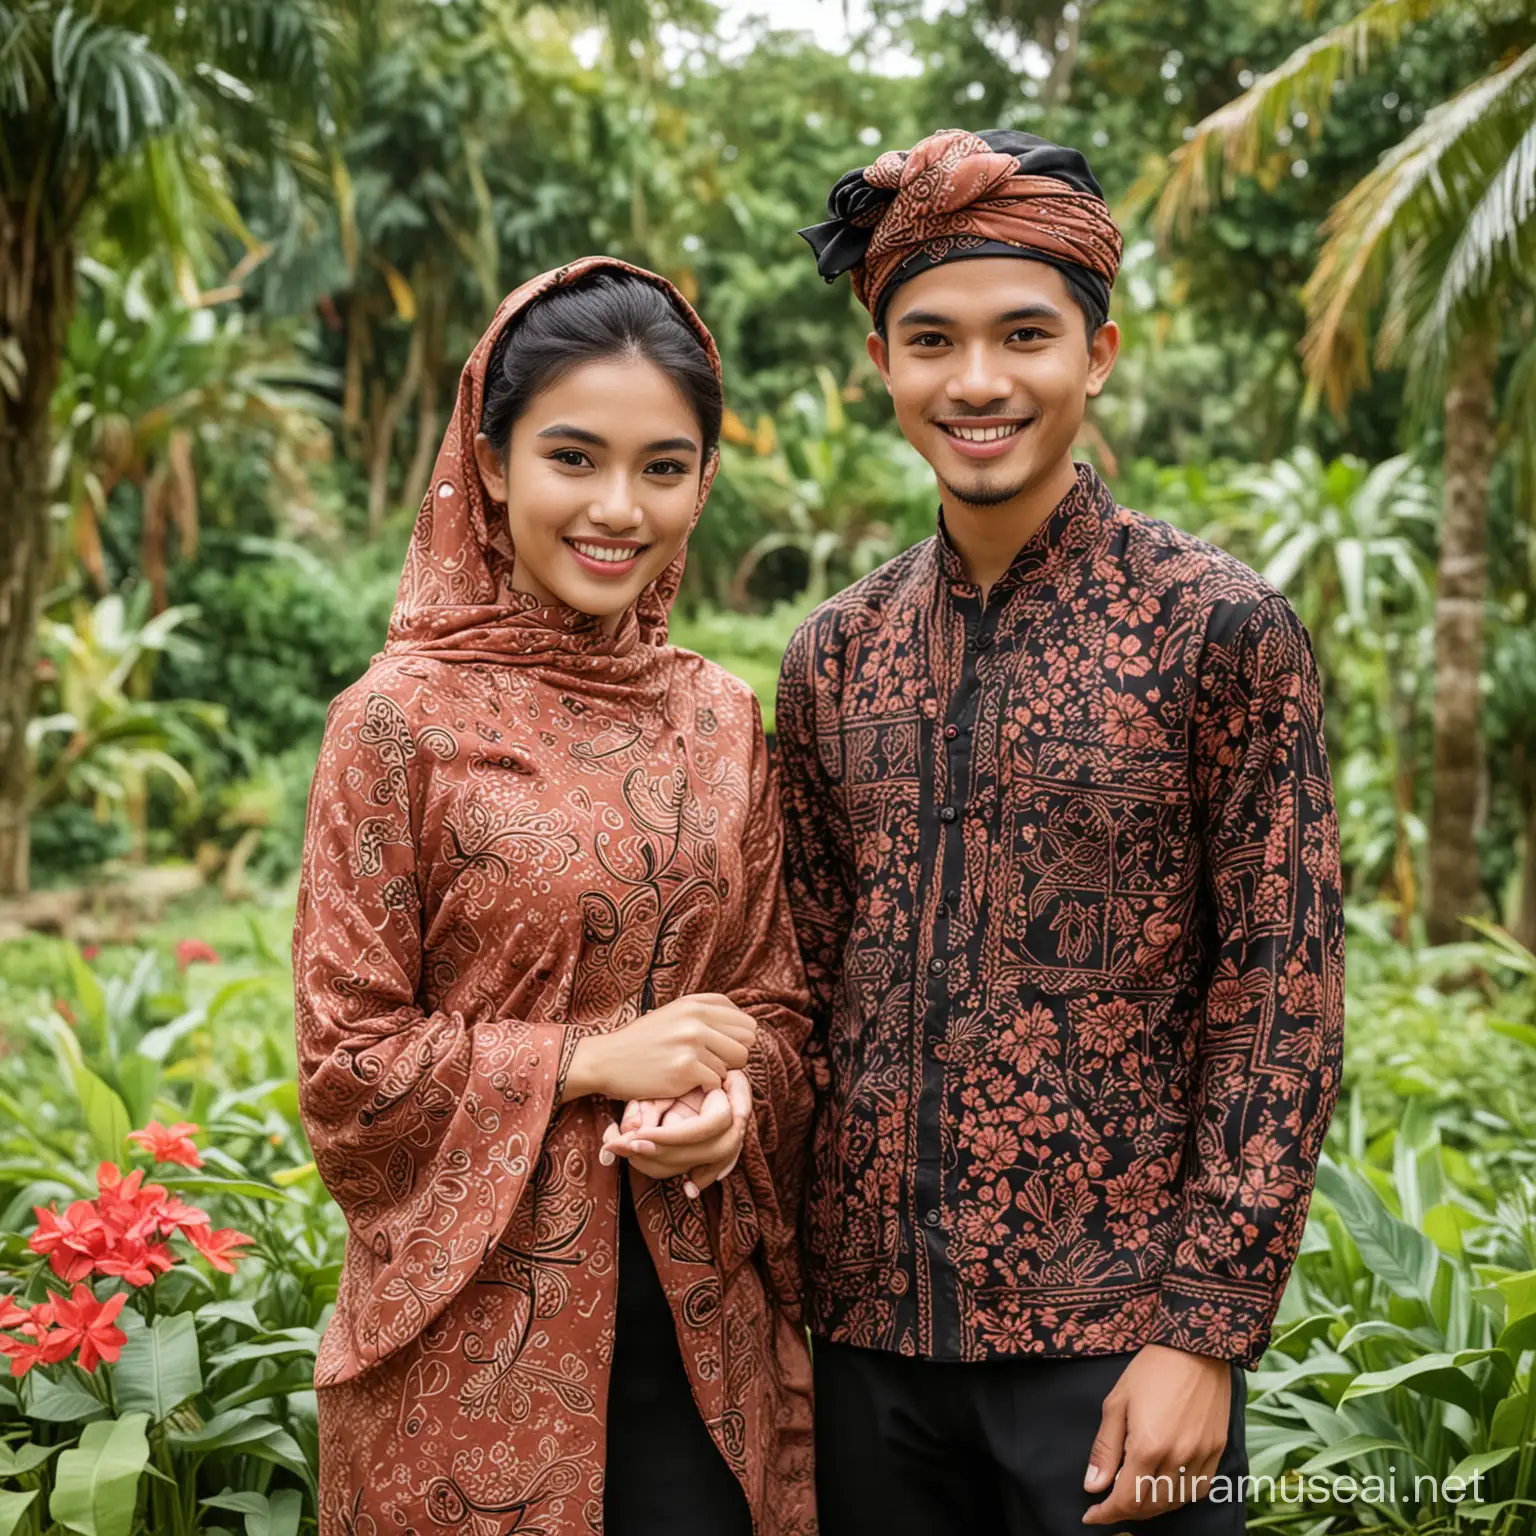 Indonesian PreWedding Photoshoot in Traditional Batik Attire at Tea Garden